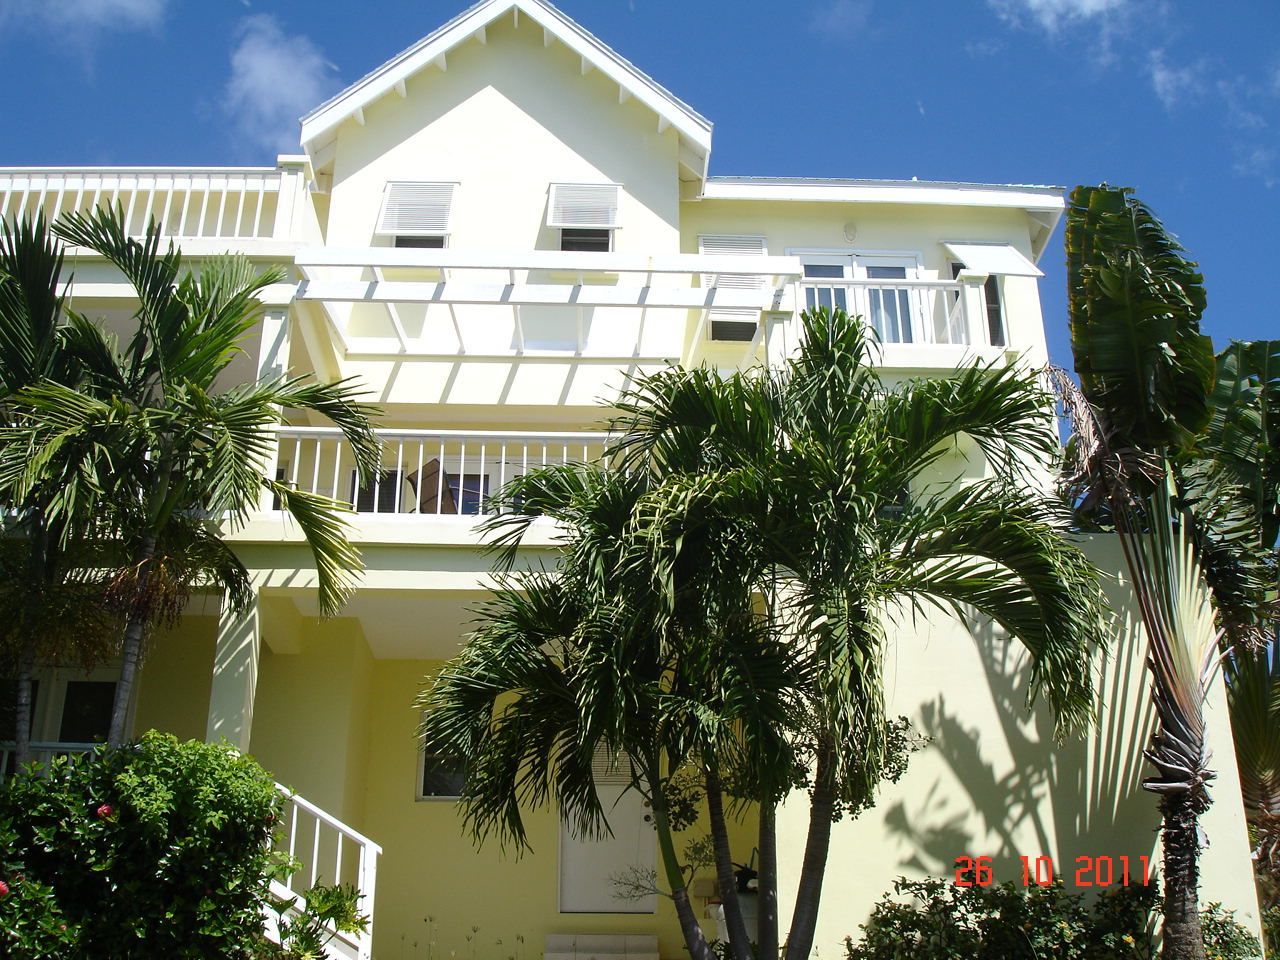 For Rent: 3 Bedroom Villa In Calypso Bay